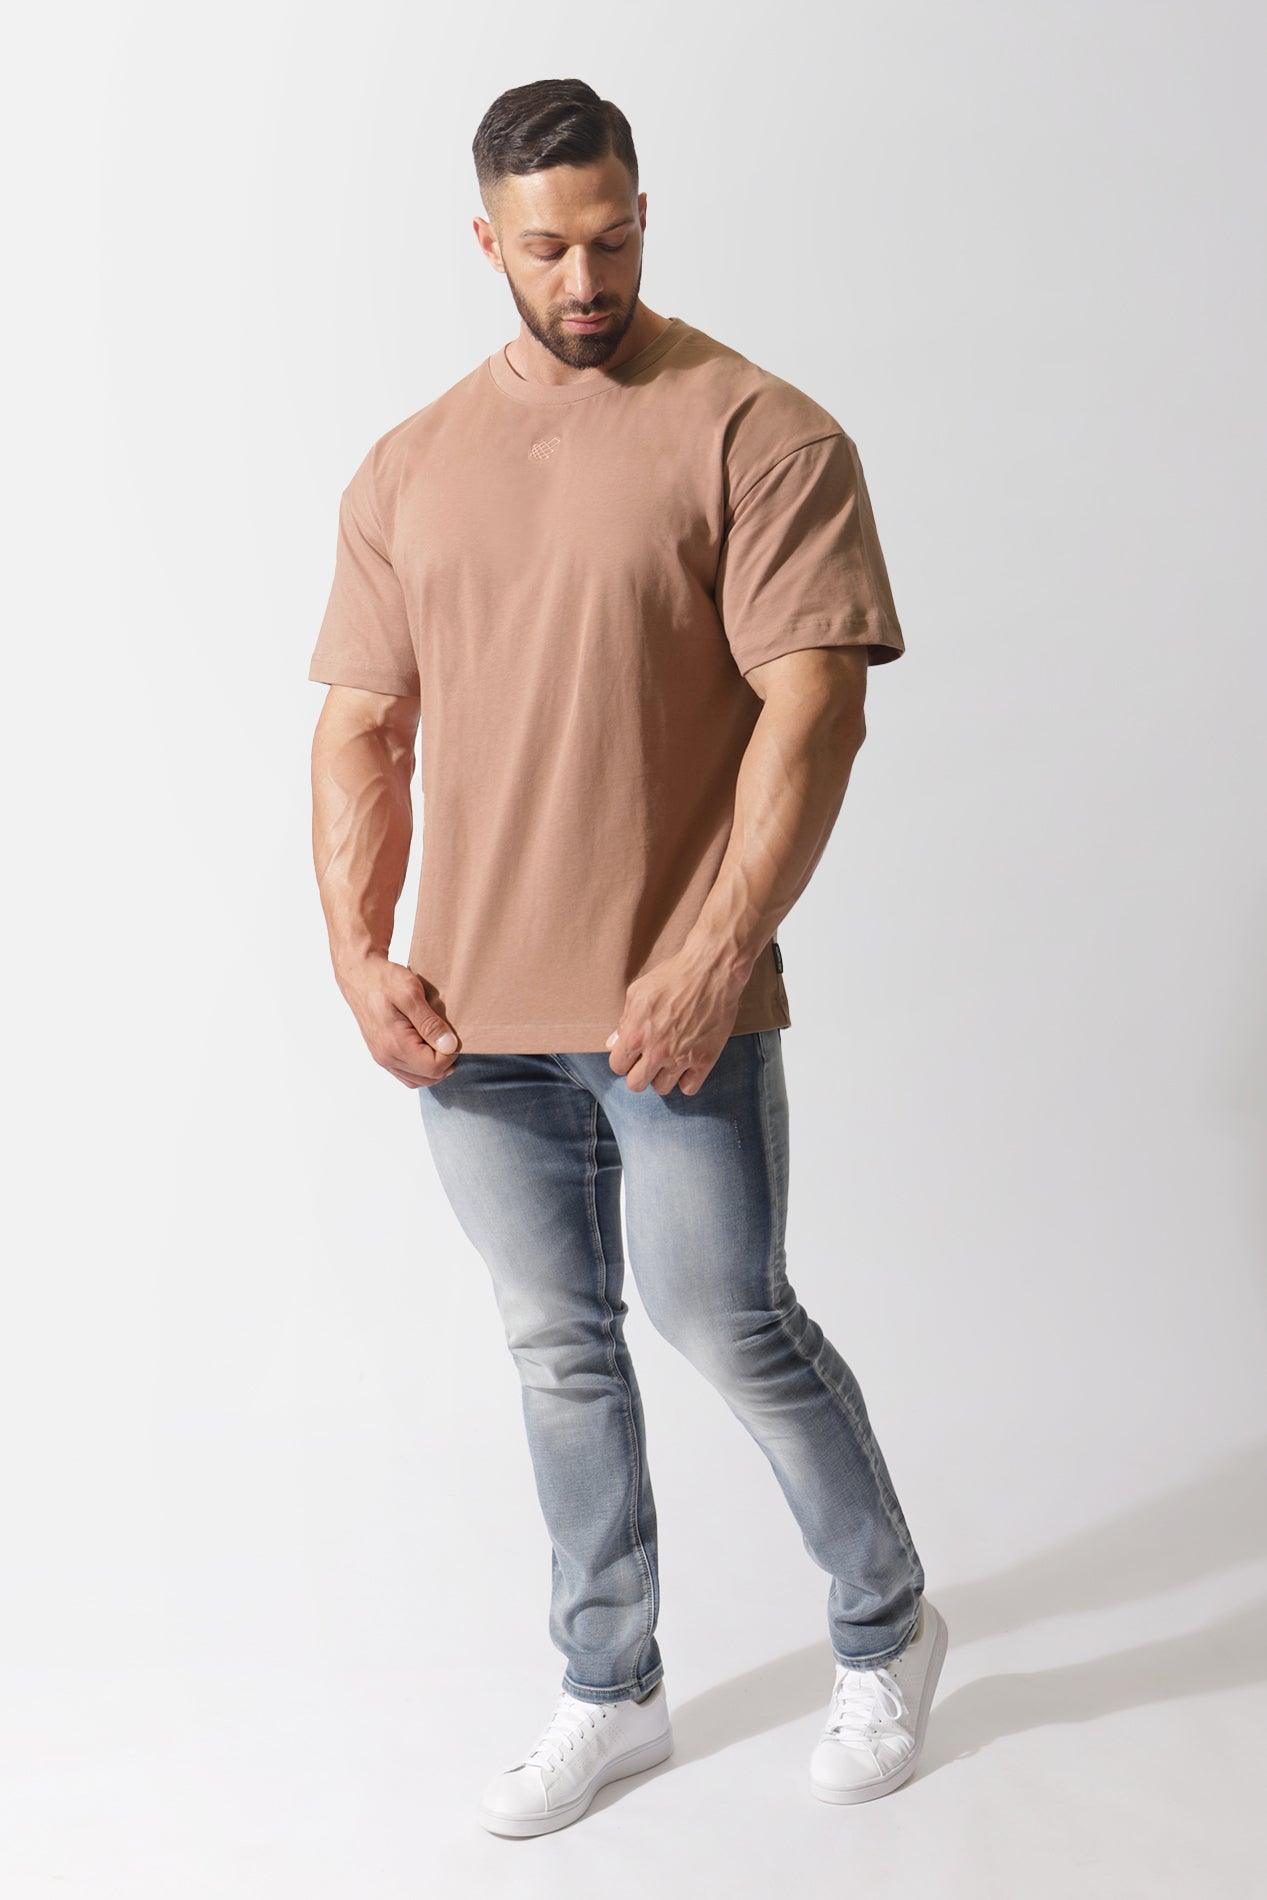 Men's High Quality T-shirts, Clothes High Quality